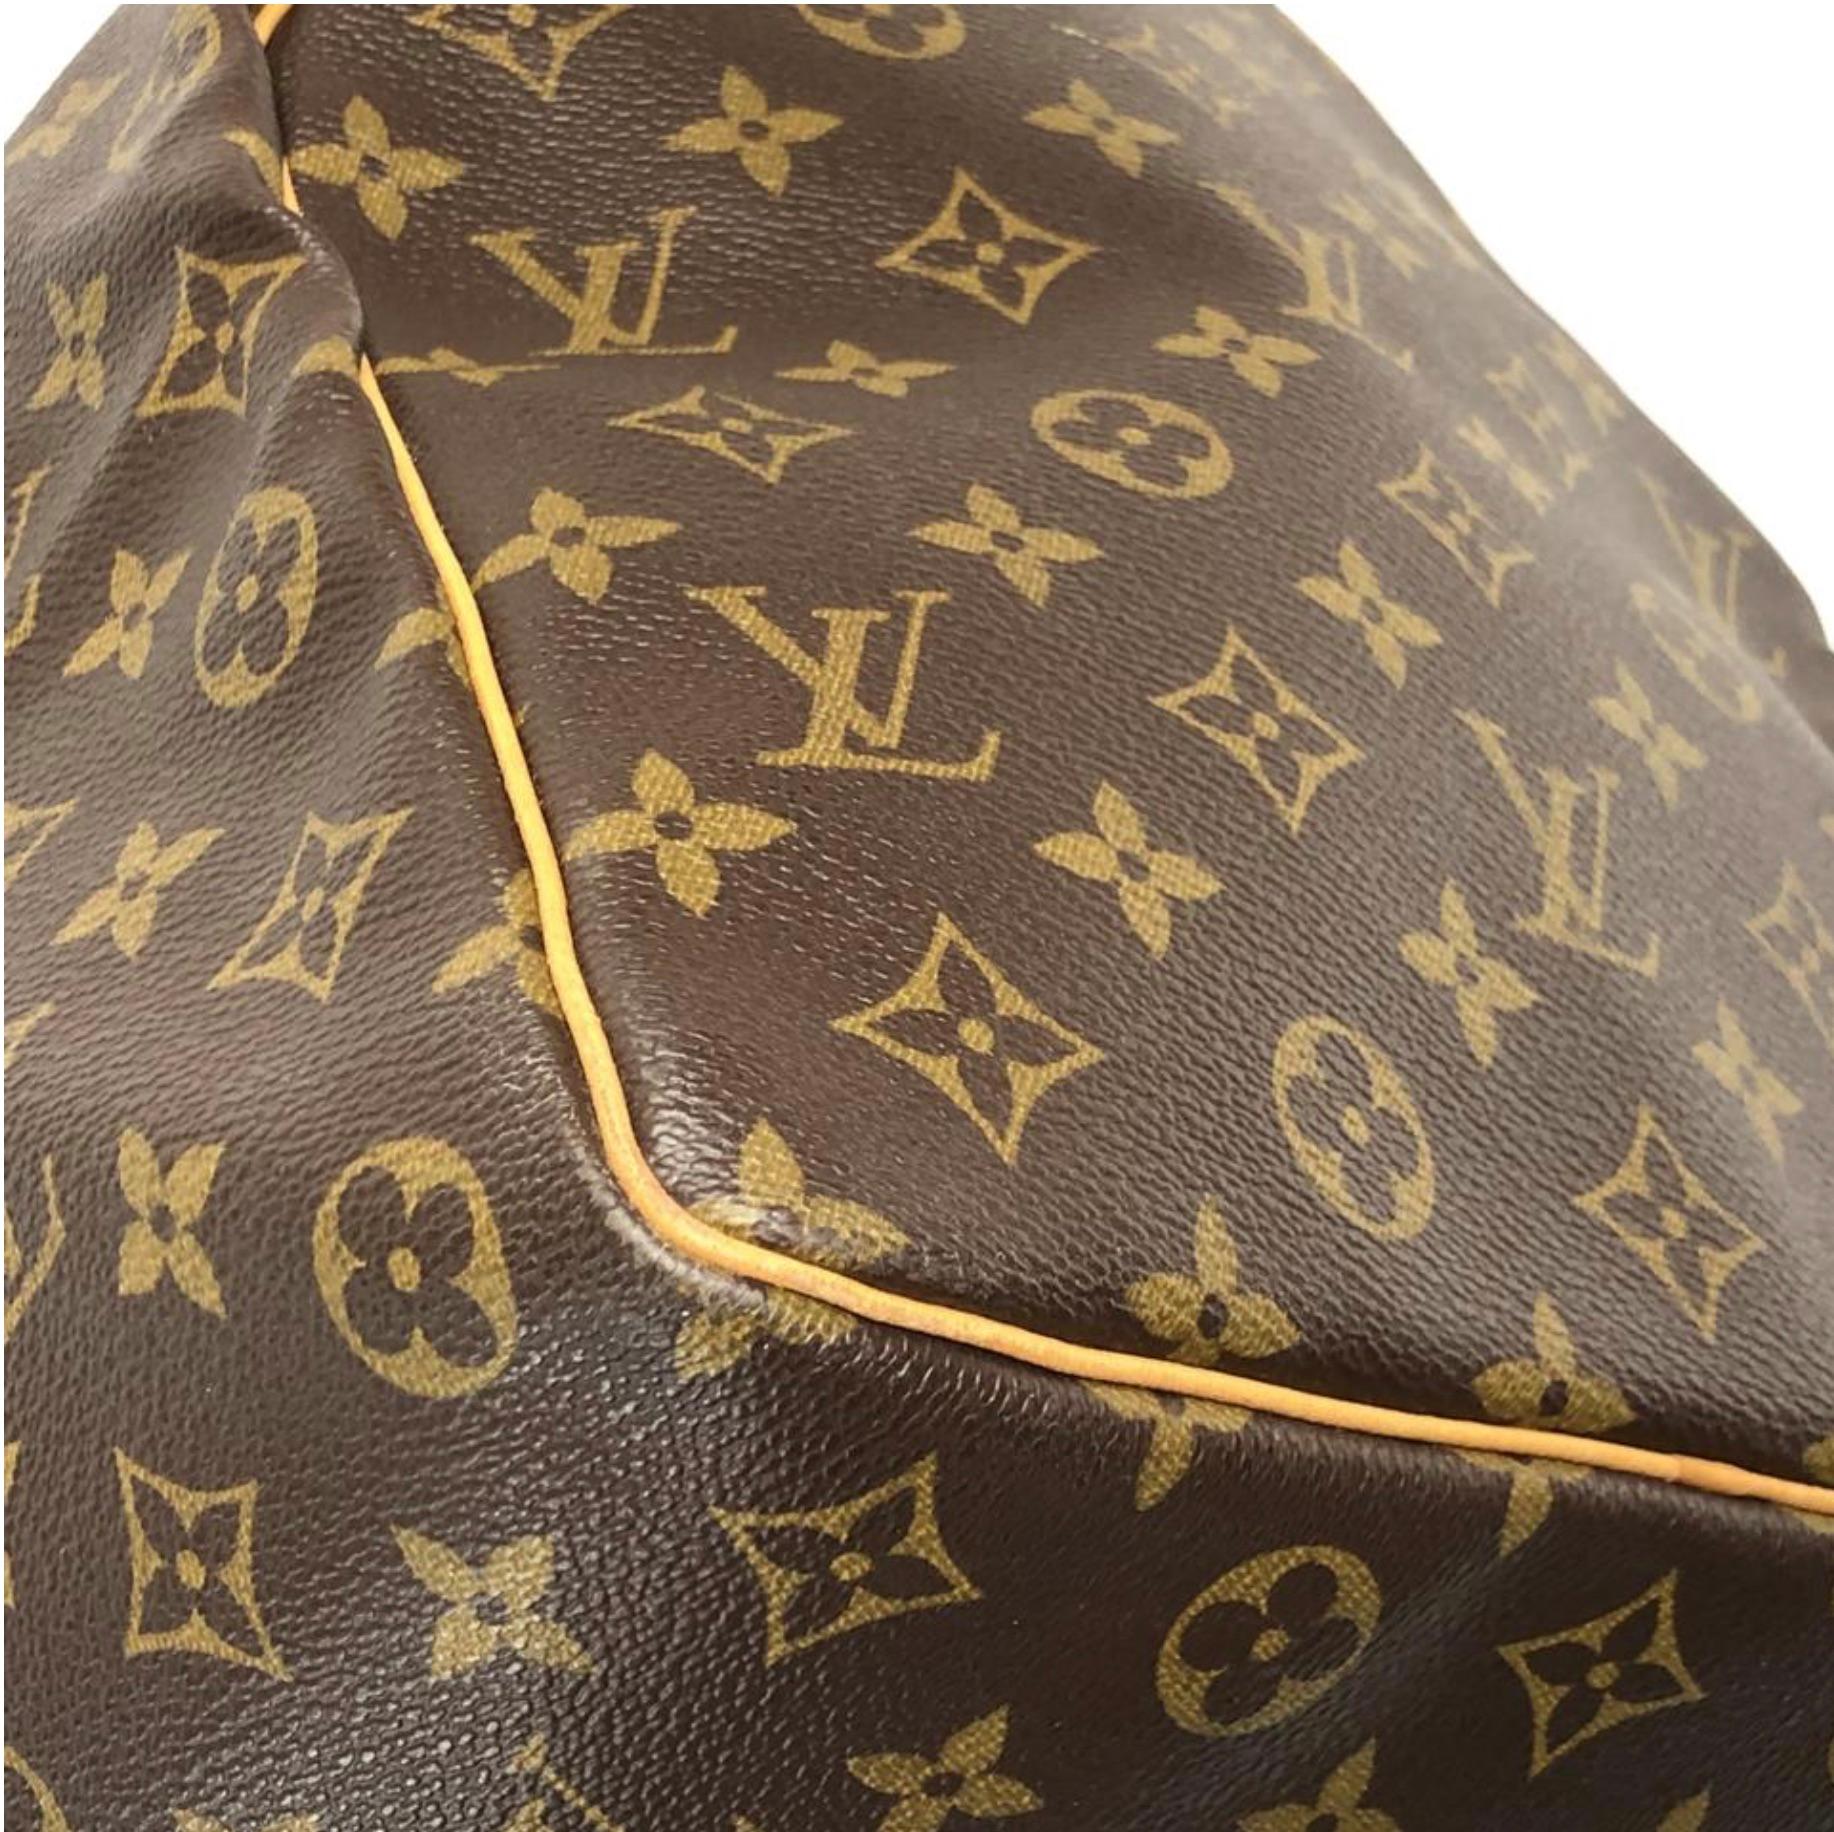  Louis Vuitton Monogram Keepall 50 Travel Bag For Sale 4